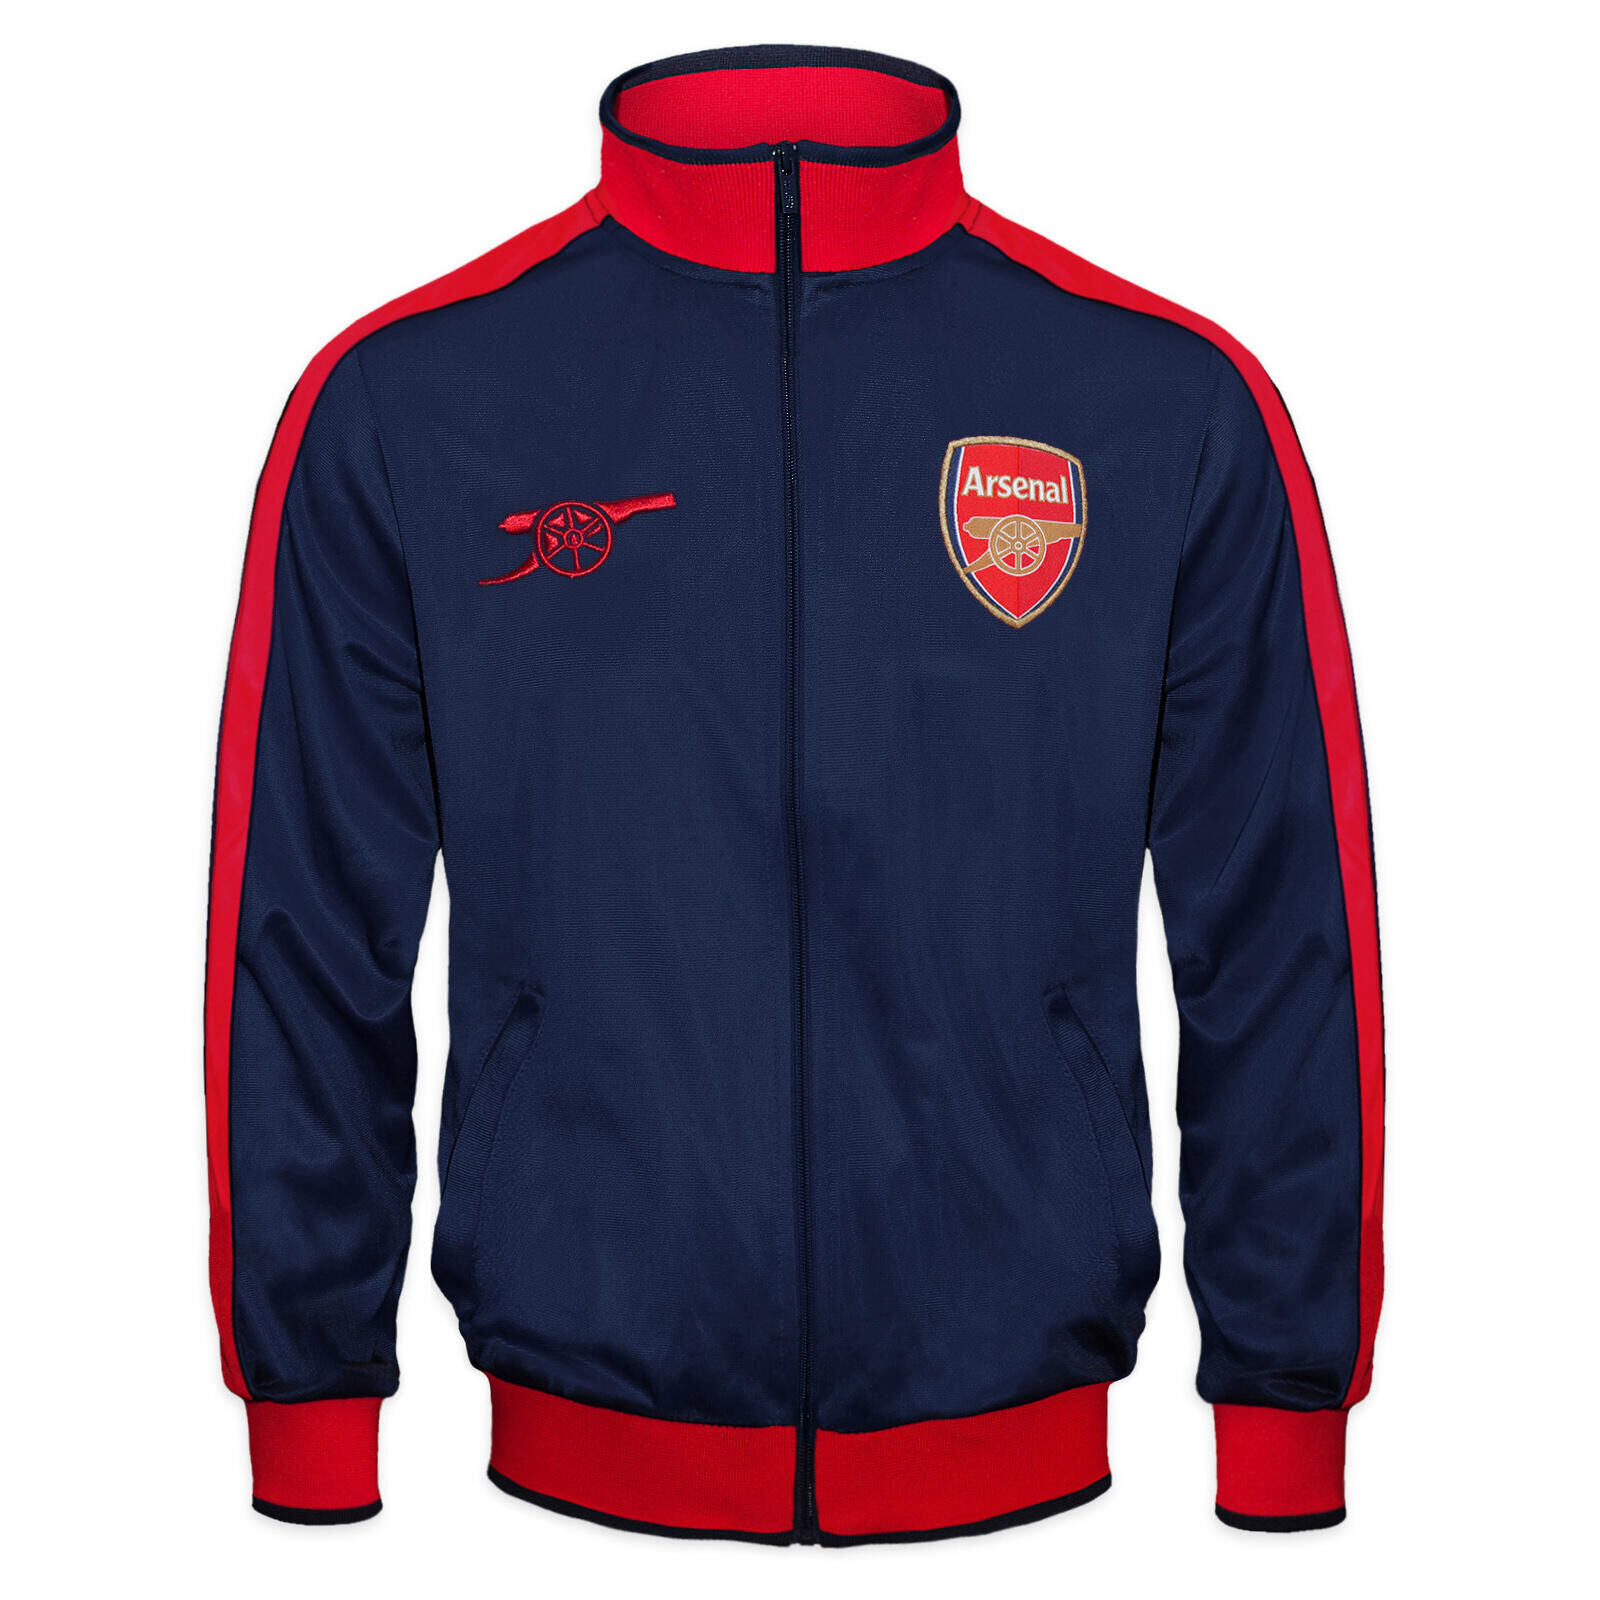 ARSENAL Arsenal FC Boys Jacket Track Top Retro Kids OFFICIAL Football Gift